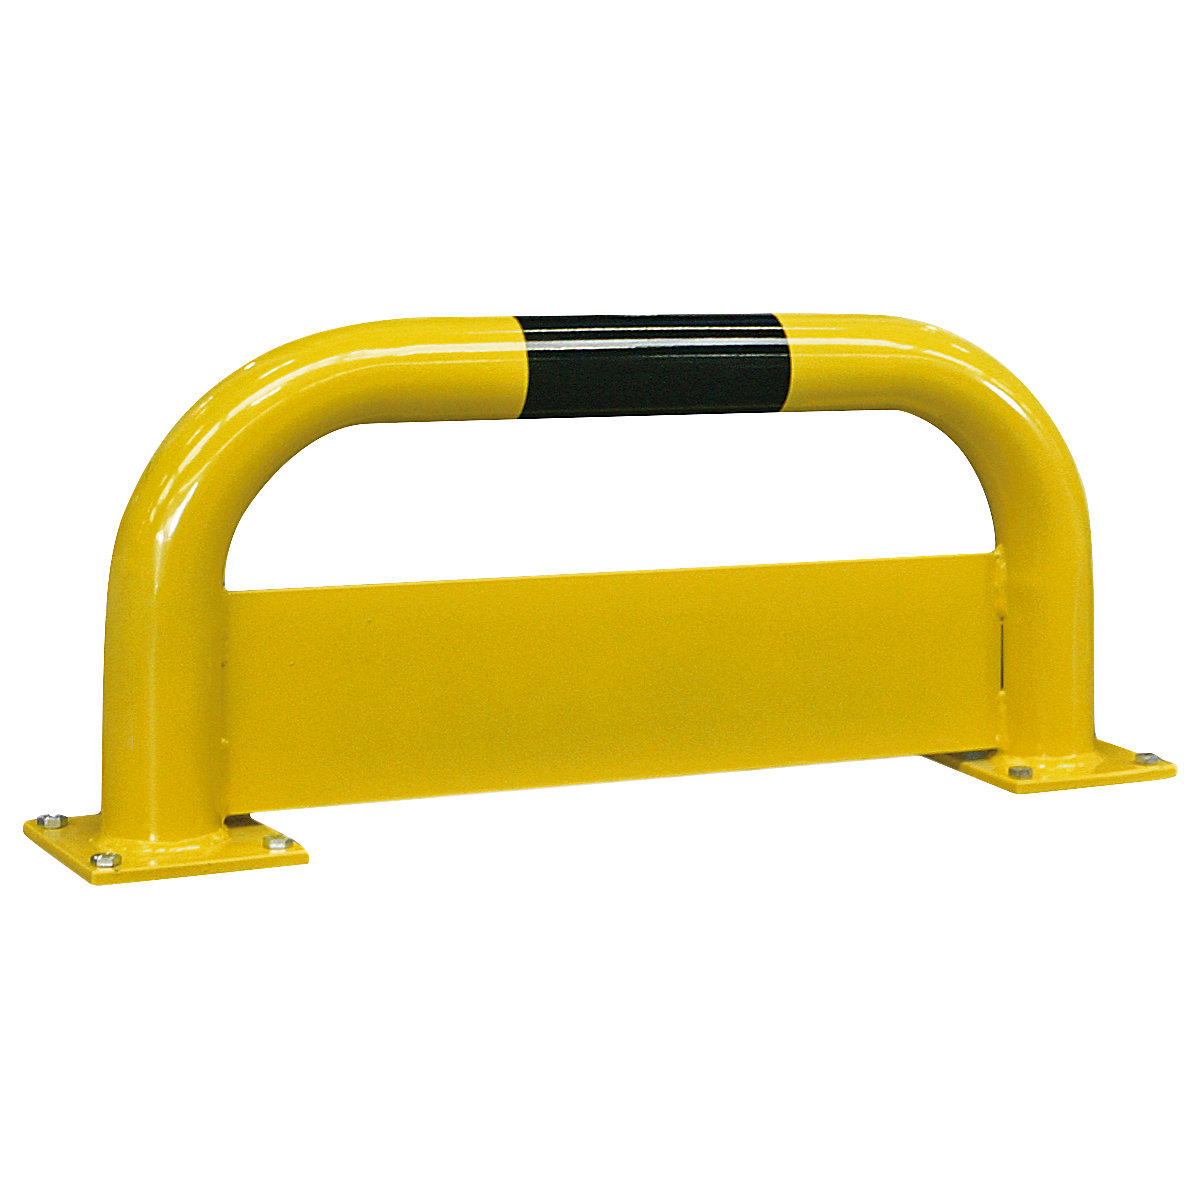 Crash protection bar, forklift guard 150 mm, HxW 350 x 1000 mm